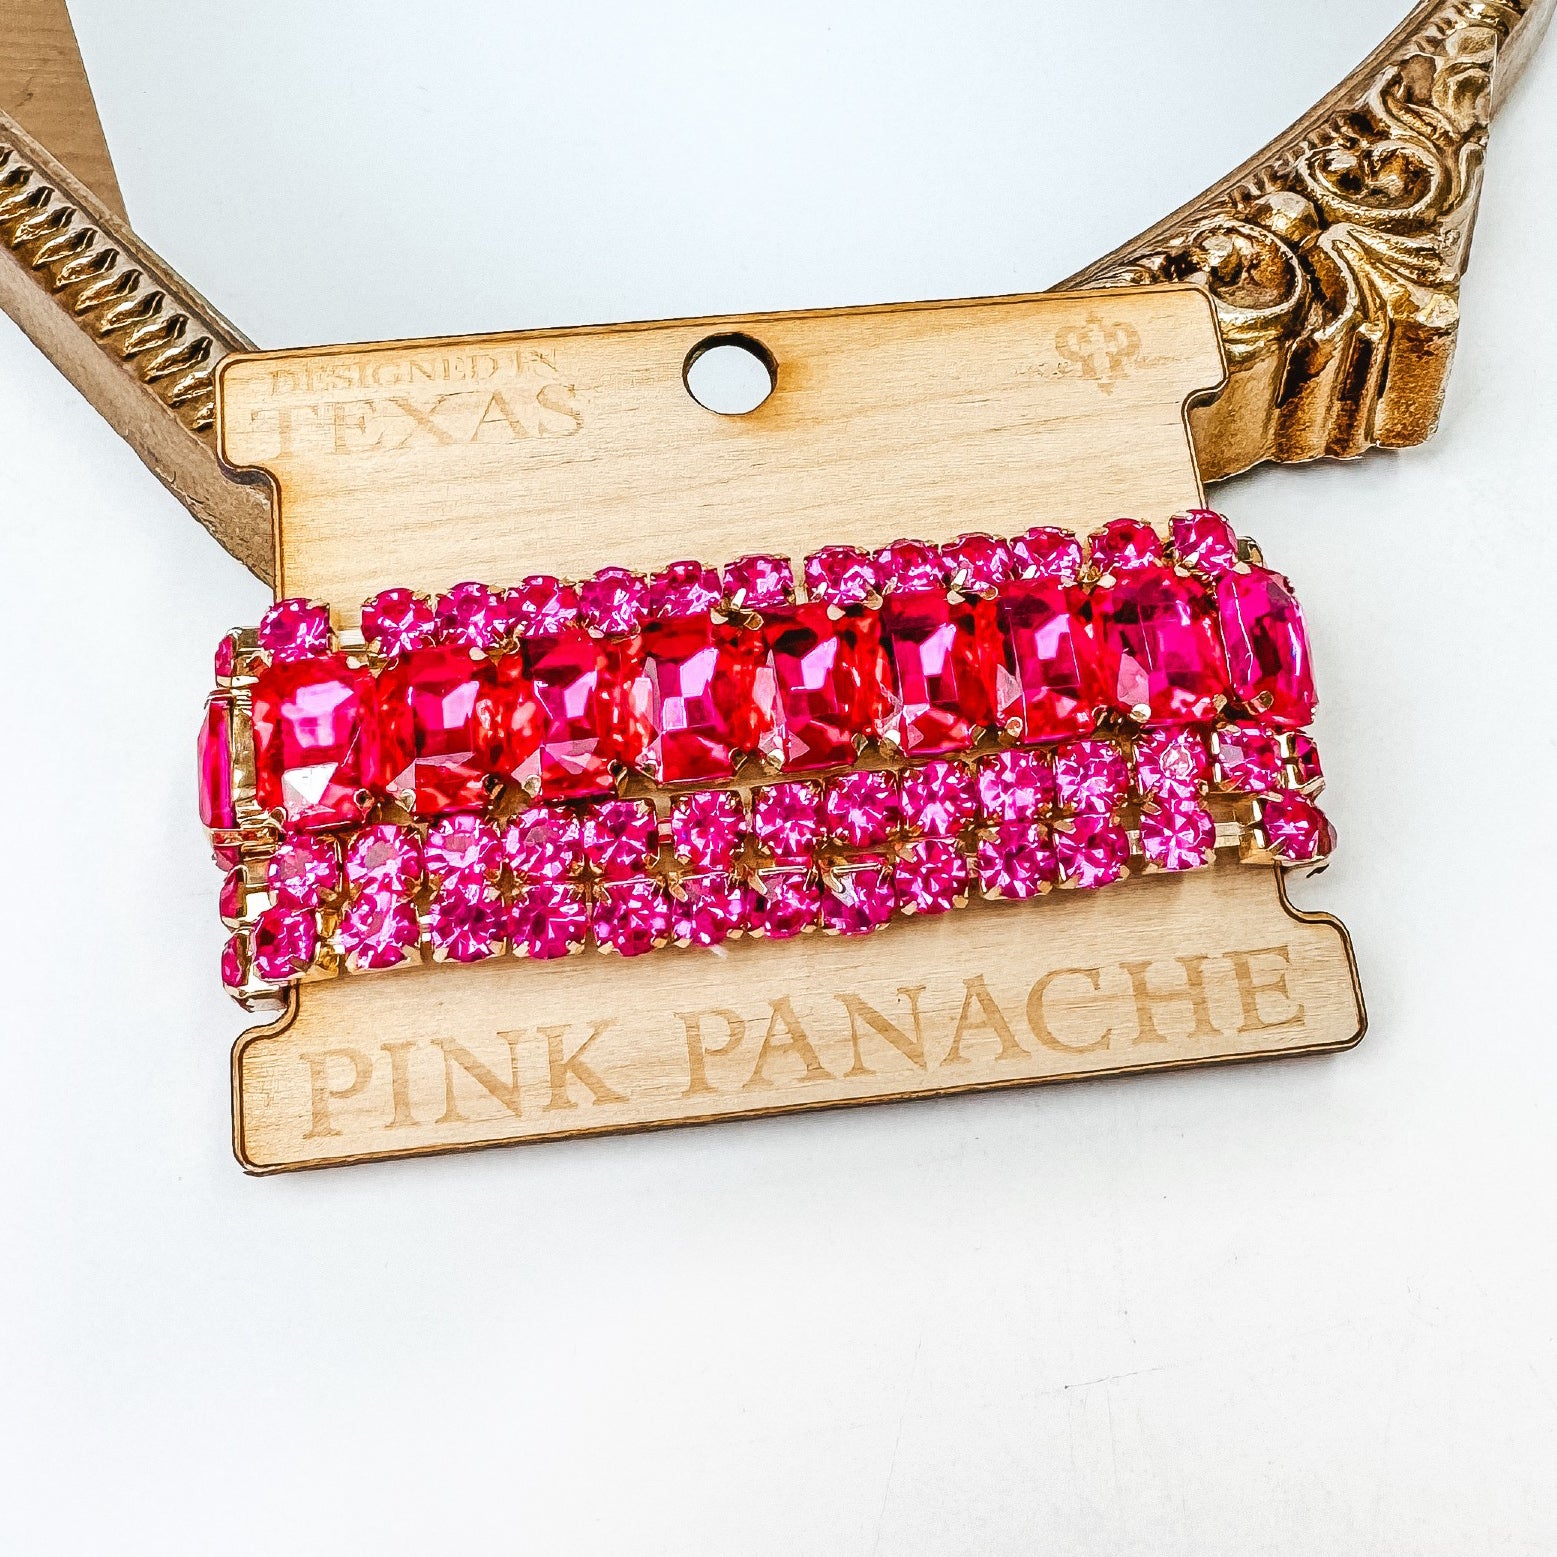 Pink Panache | Silver Tone Rhinestone Bracelet Set in Fuchsia Pink - Giddy Up Glamour Boutique